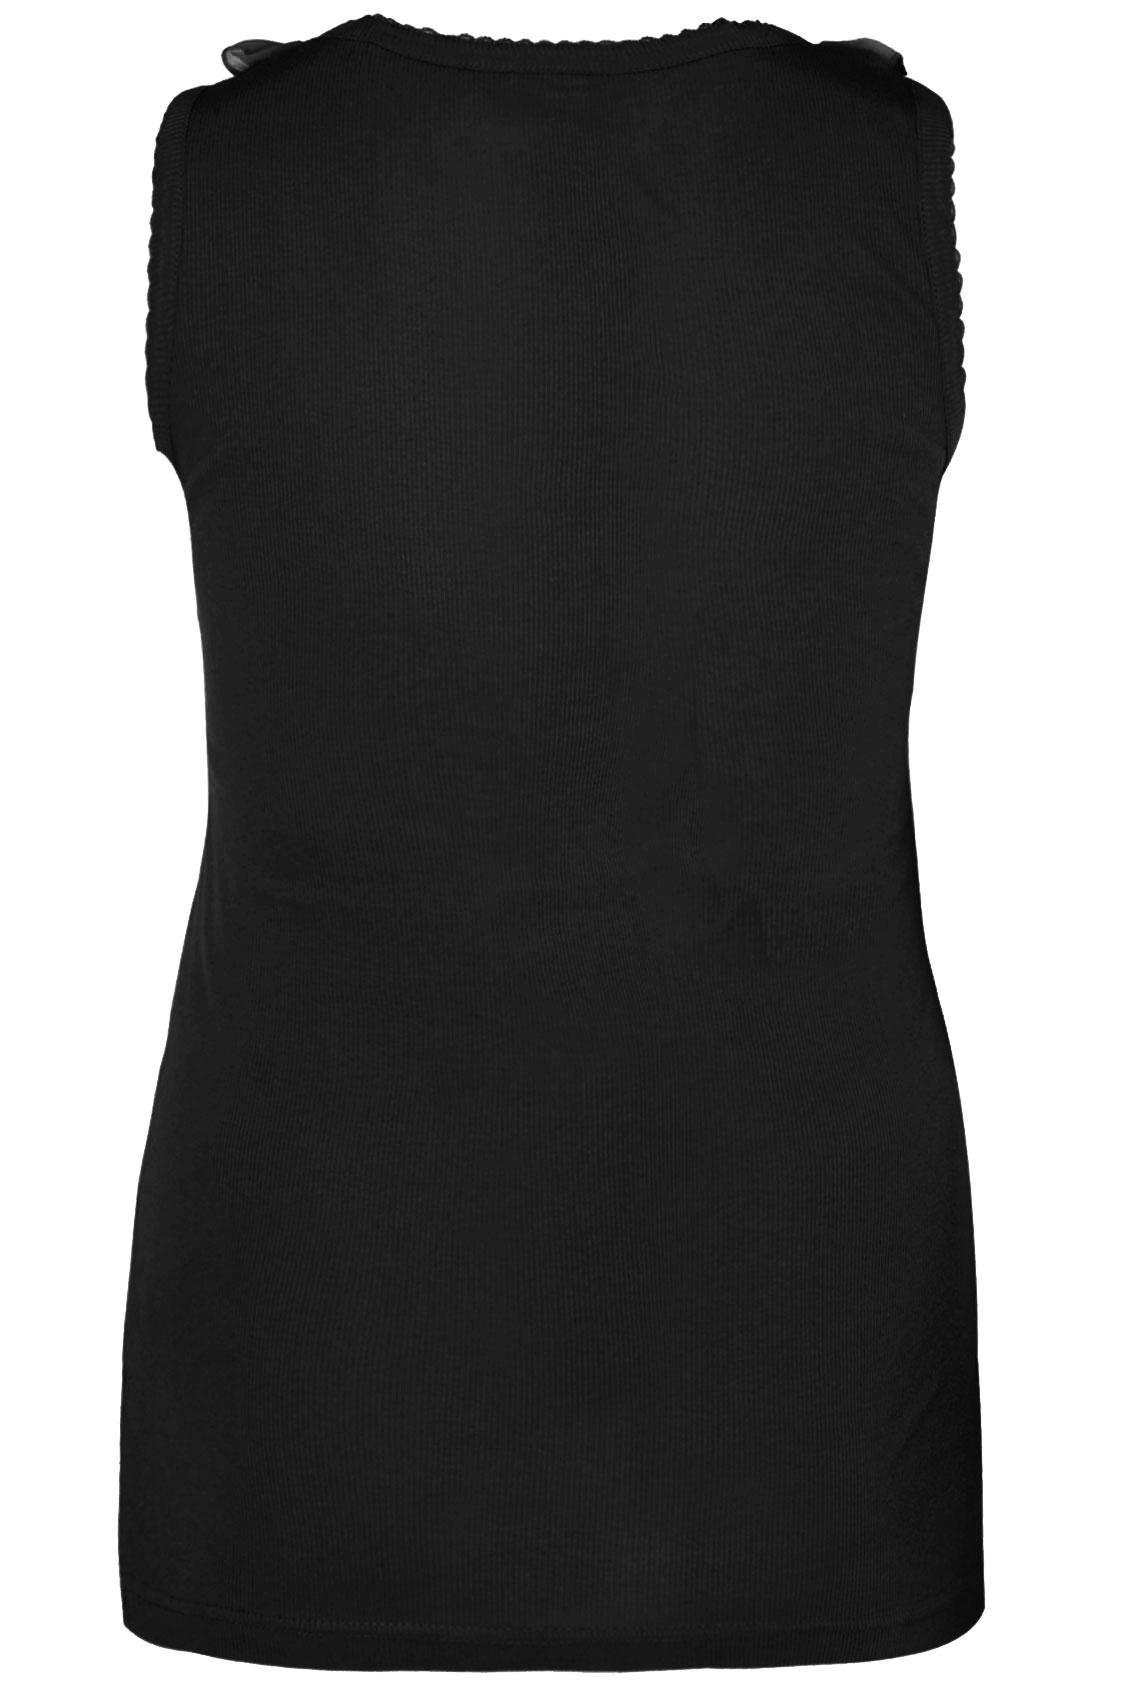 Black Ribbed Cotton Vest With Frill Neckline plus size 16,18,20,22,24 ...